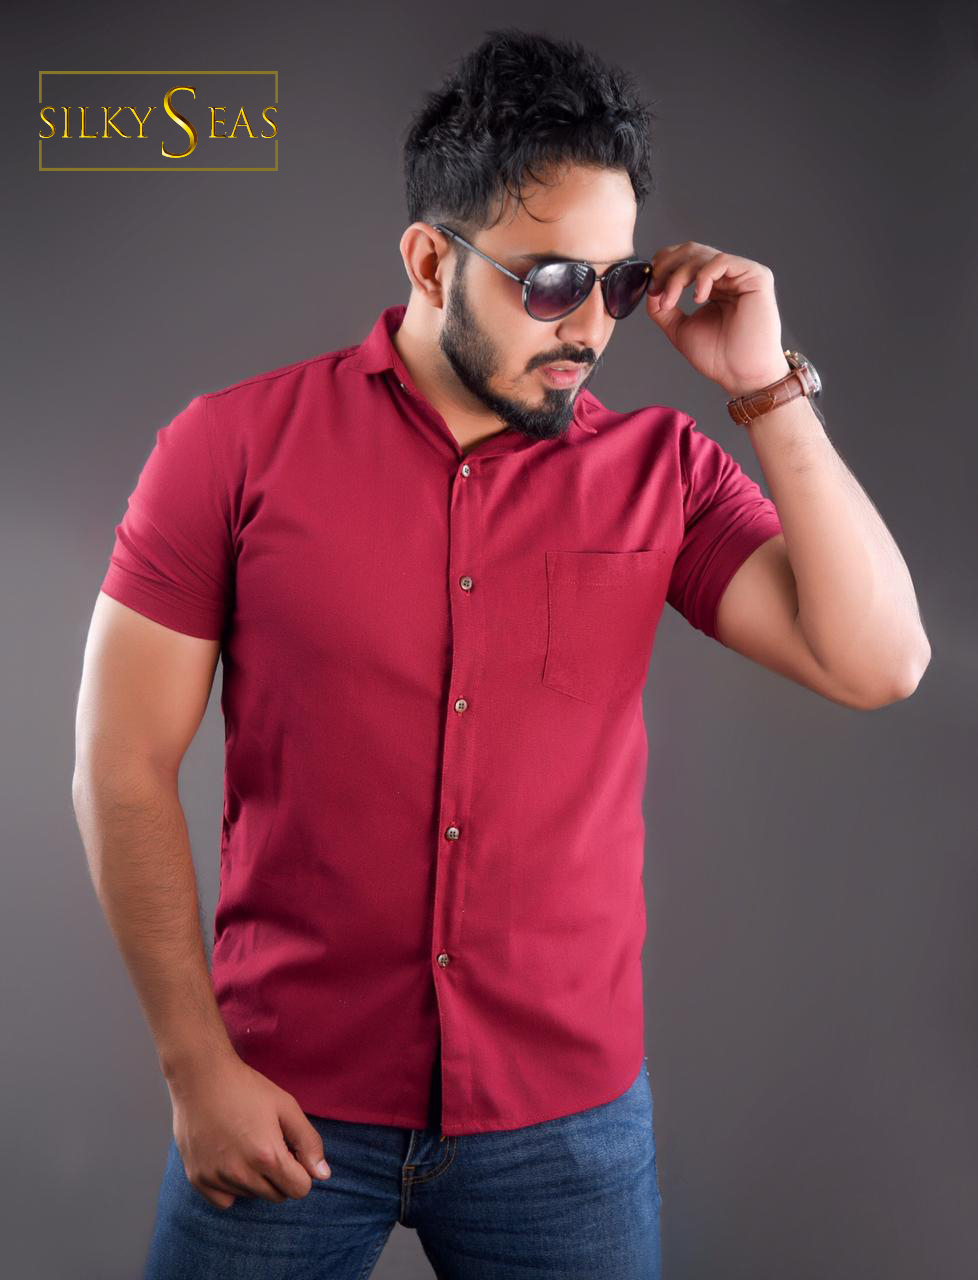 Premium Quality linen Shirts in sri lanka - SilkySeas